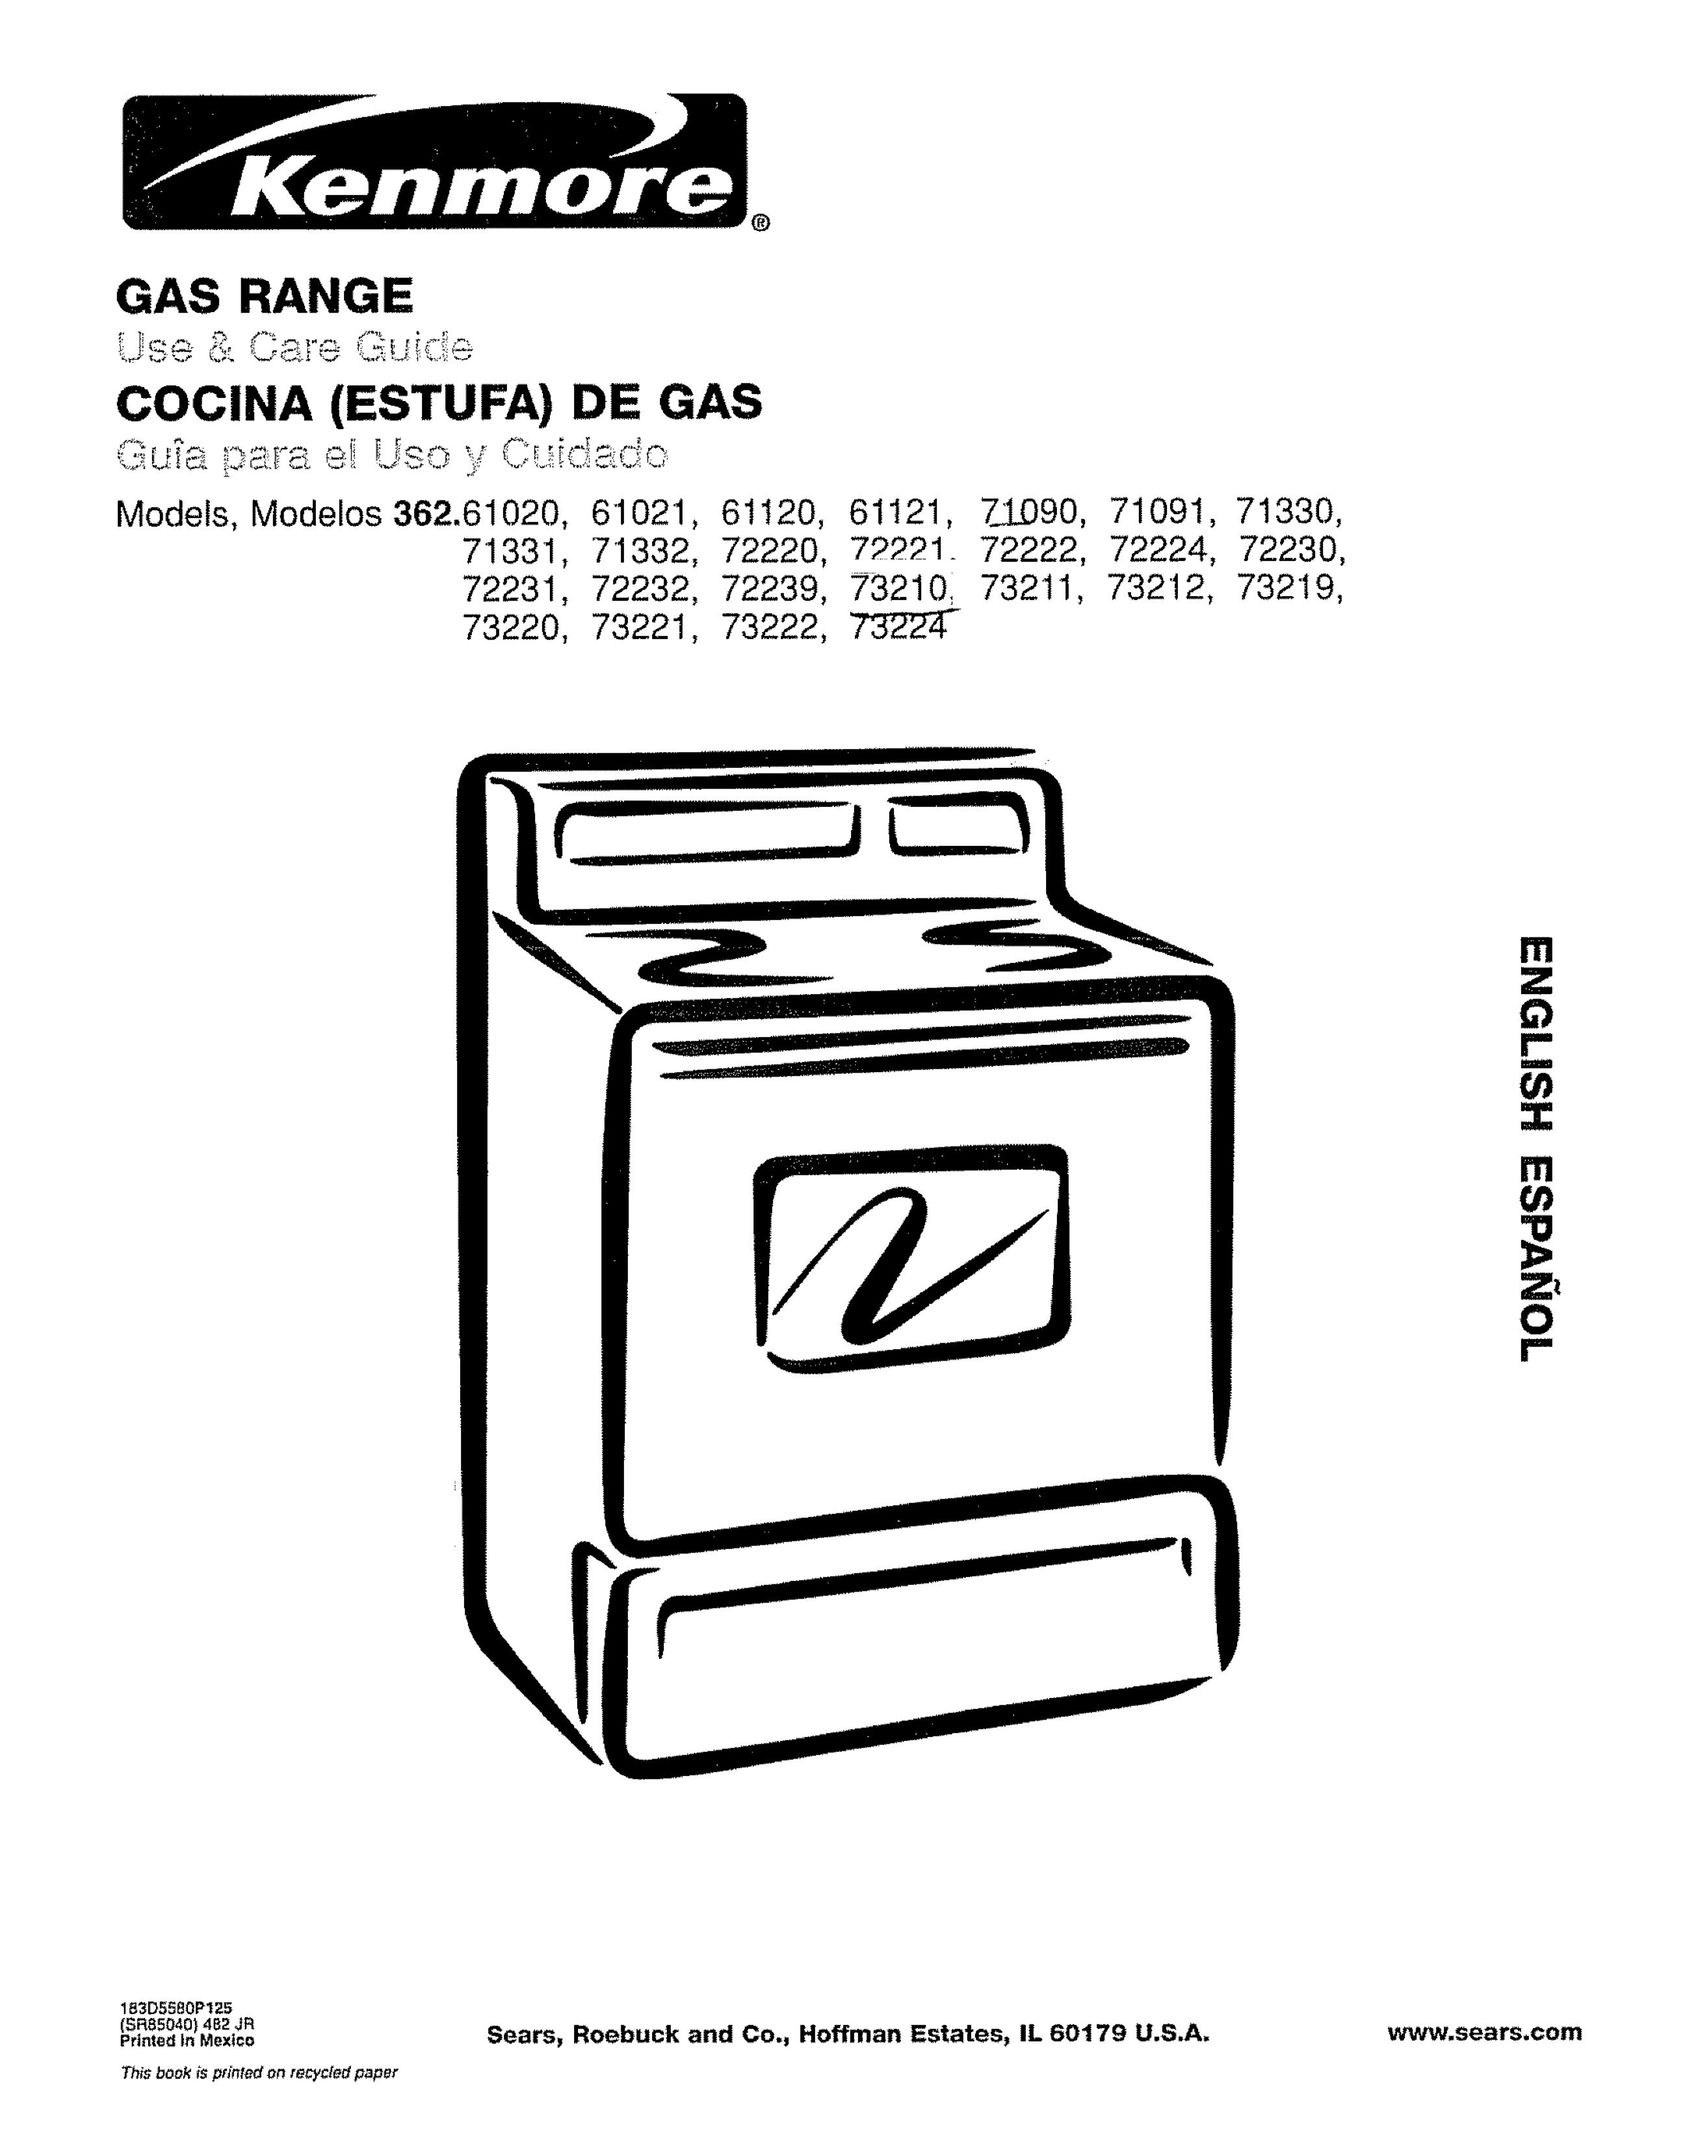 Kenmore 362.72231 Range User Manual